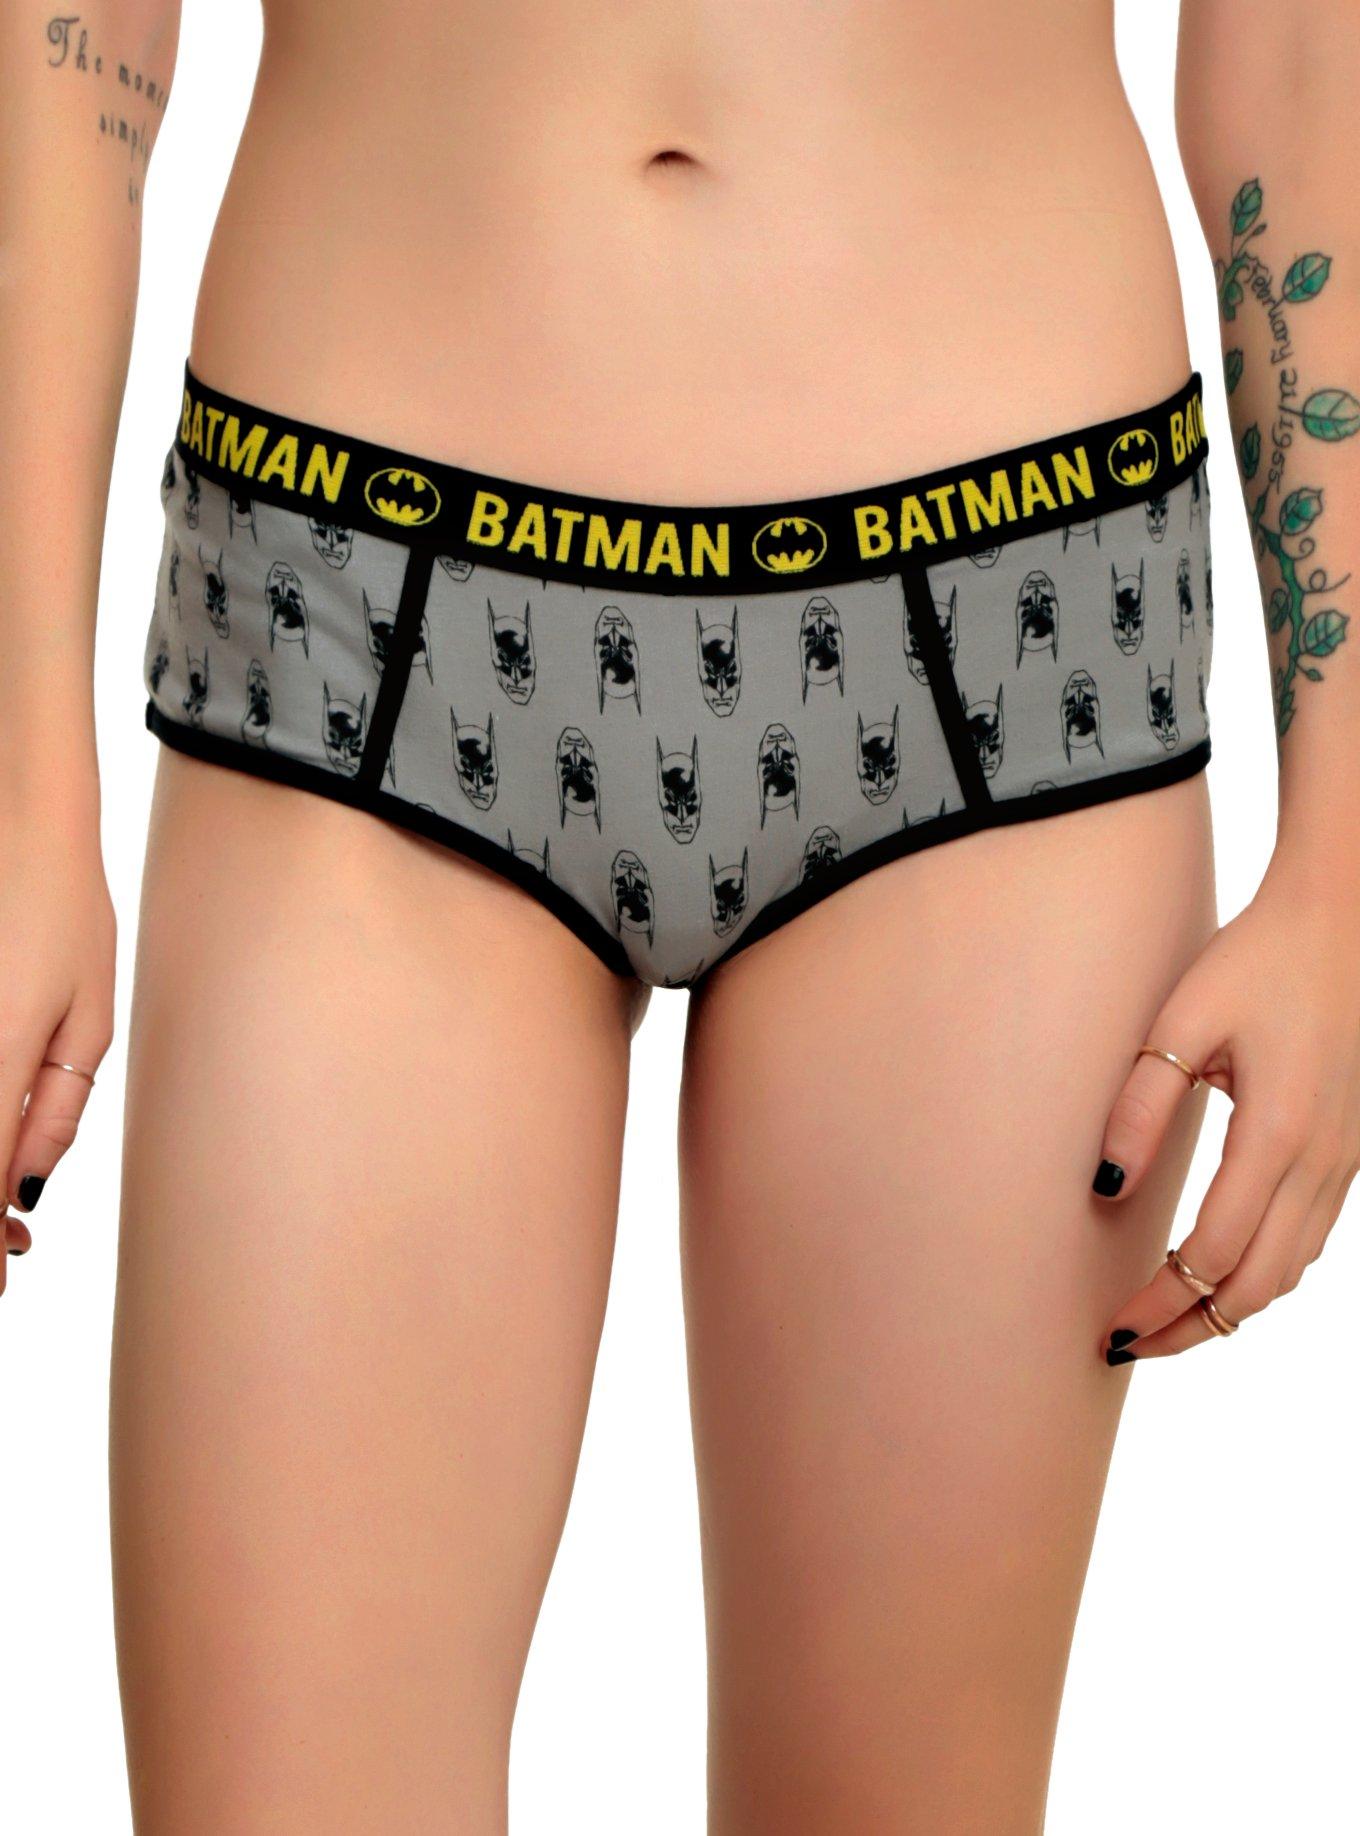 cindy wan recommends Girls In Batman Panties